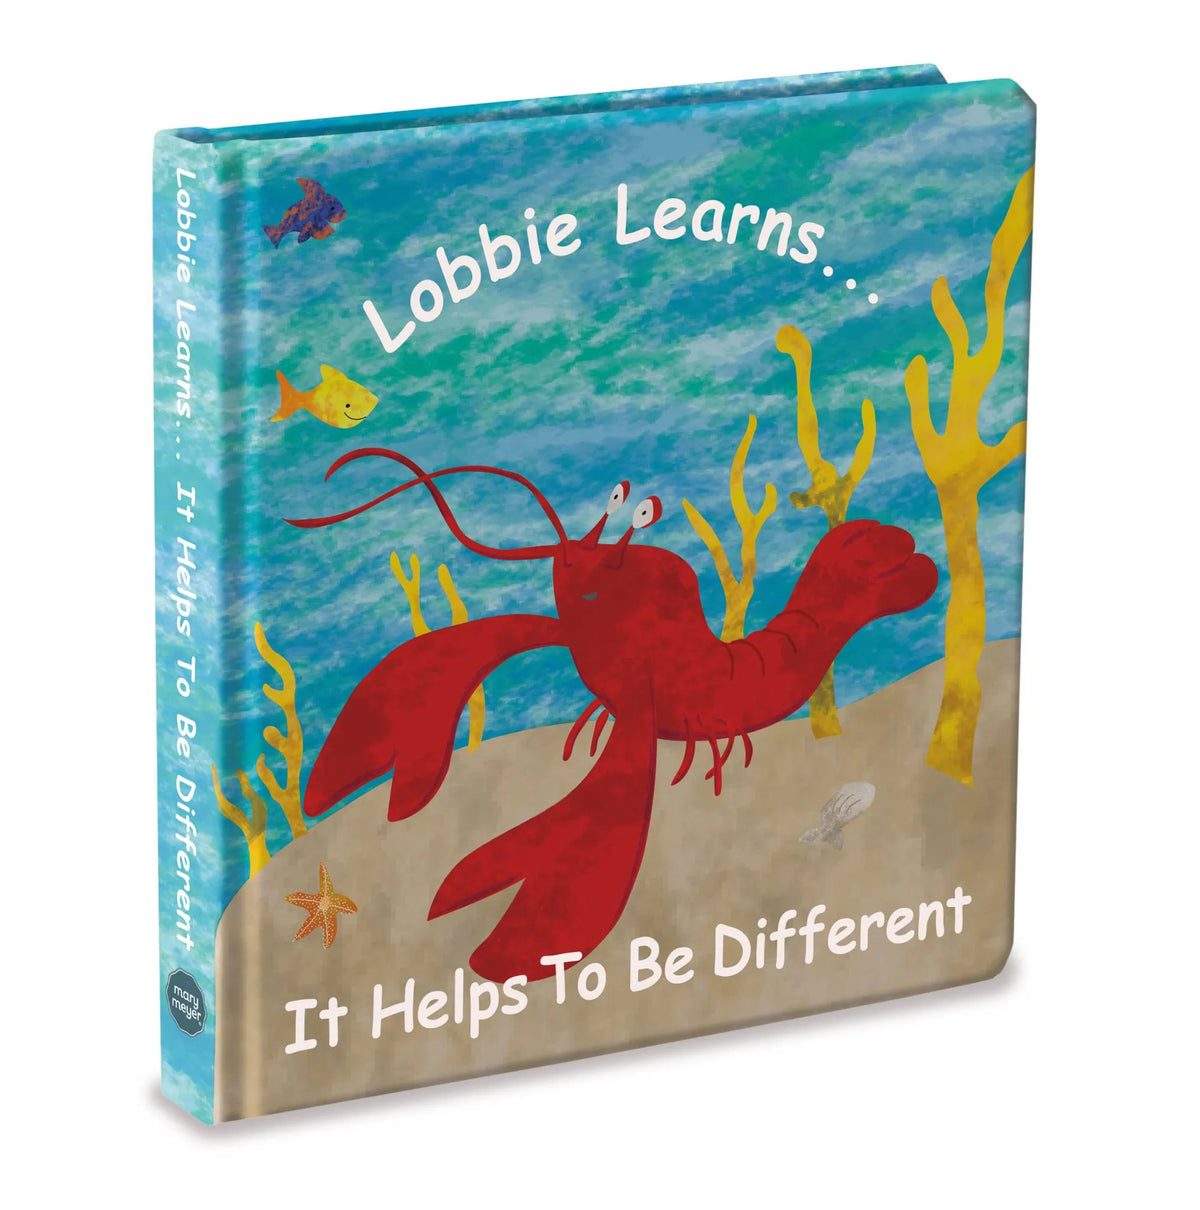 Lobbie Learns…” Large Board Book – 8×8″